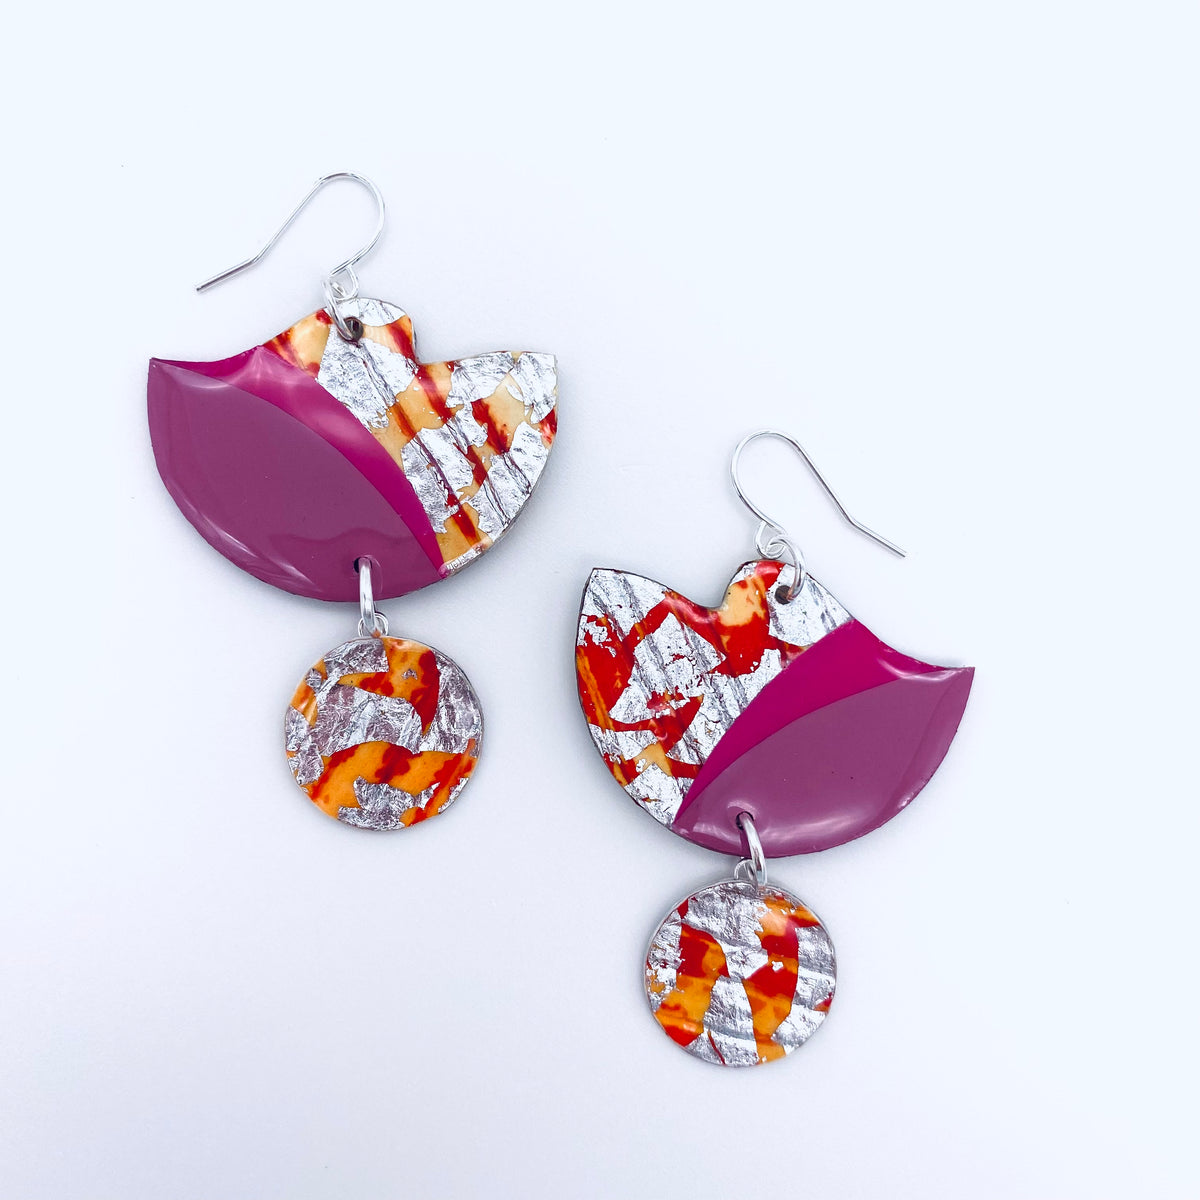 Tonn sgraffito textile earrings in pinks/orange/silver